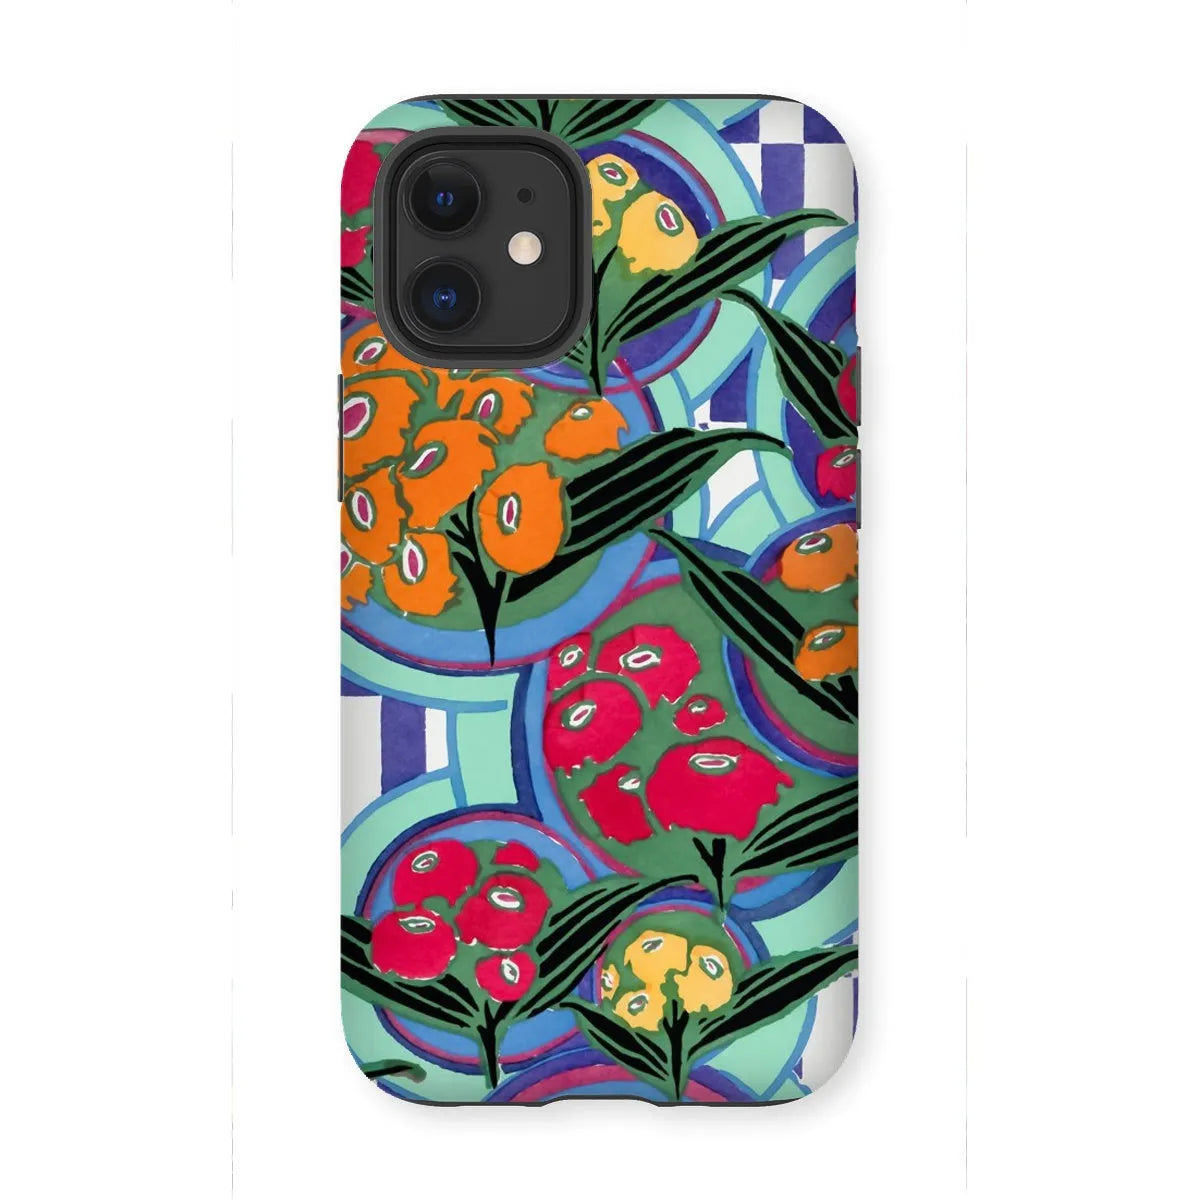 Vibrant Floral Aesthetic Art Phone Case - E.a. Séguy - Iphone 12 Mini / Matte - Mobile Phone Cases - Aesthetic Art